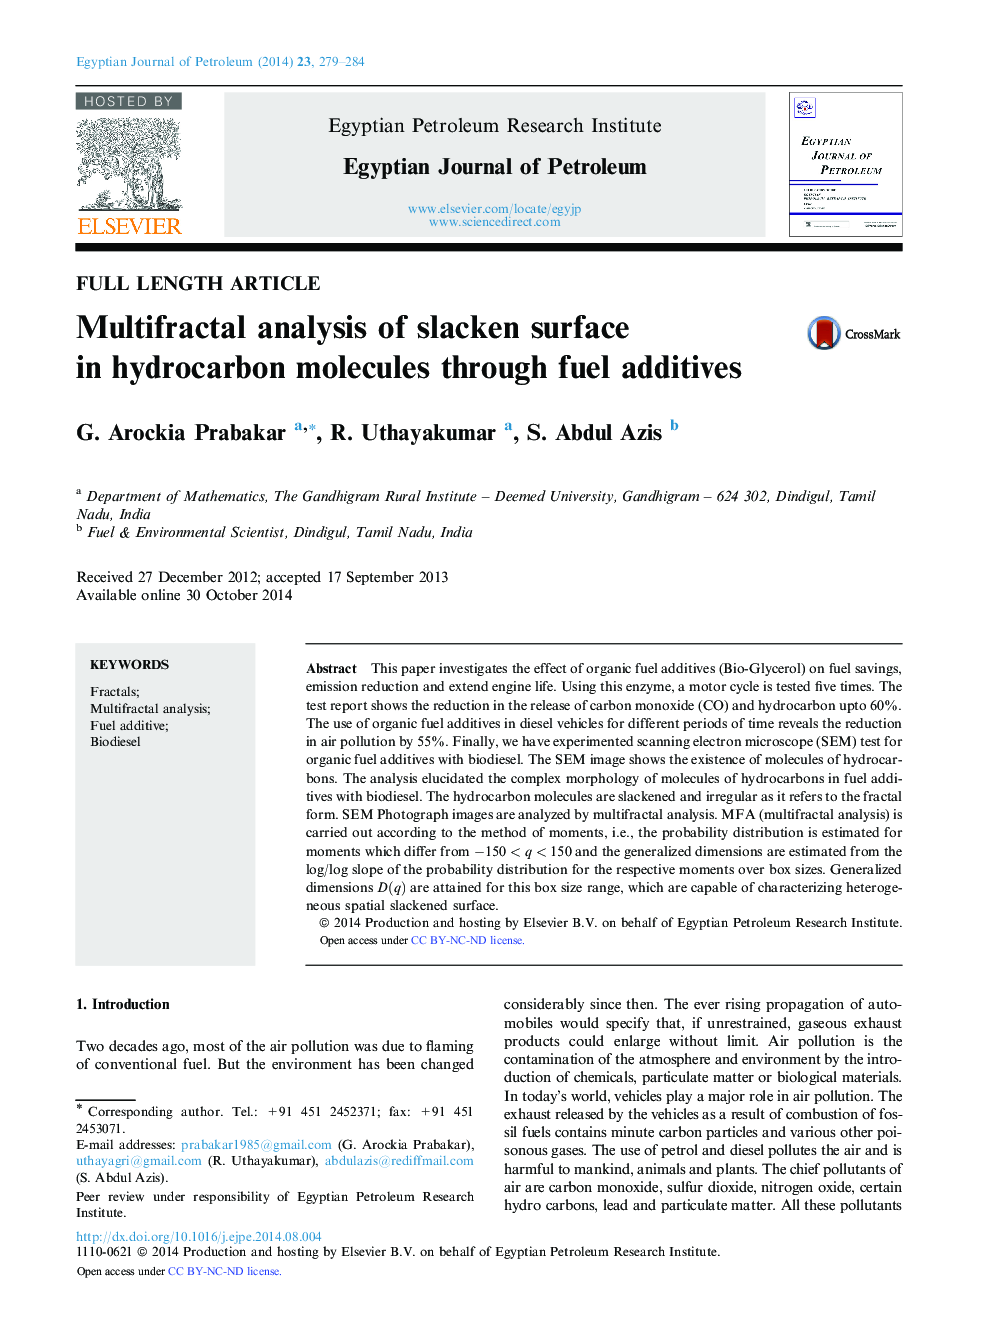 Multifractal analysis of slacken surface in hydrocarbon molecules through fuel additives 